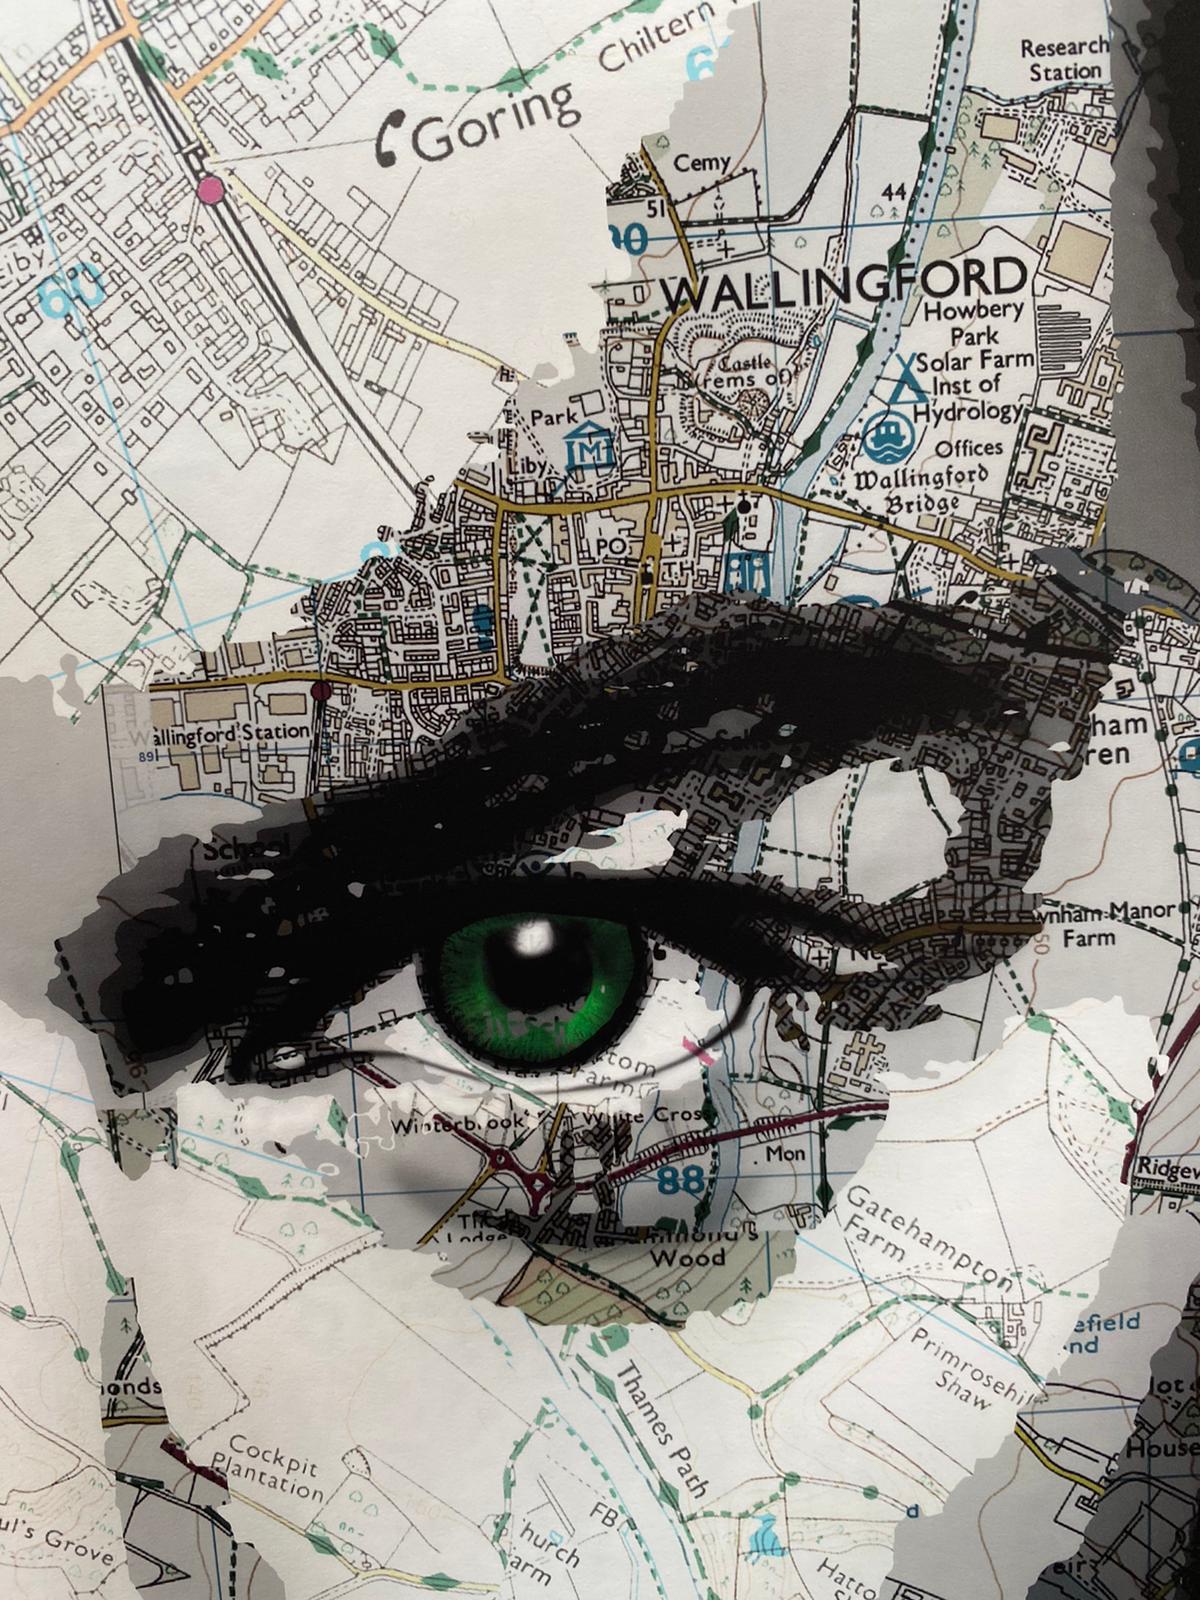 "Older George Michael in Goring - Green Eyes" - Amelia Archer